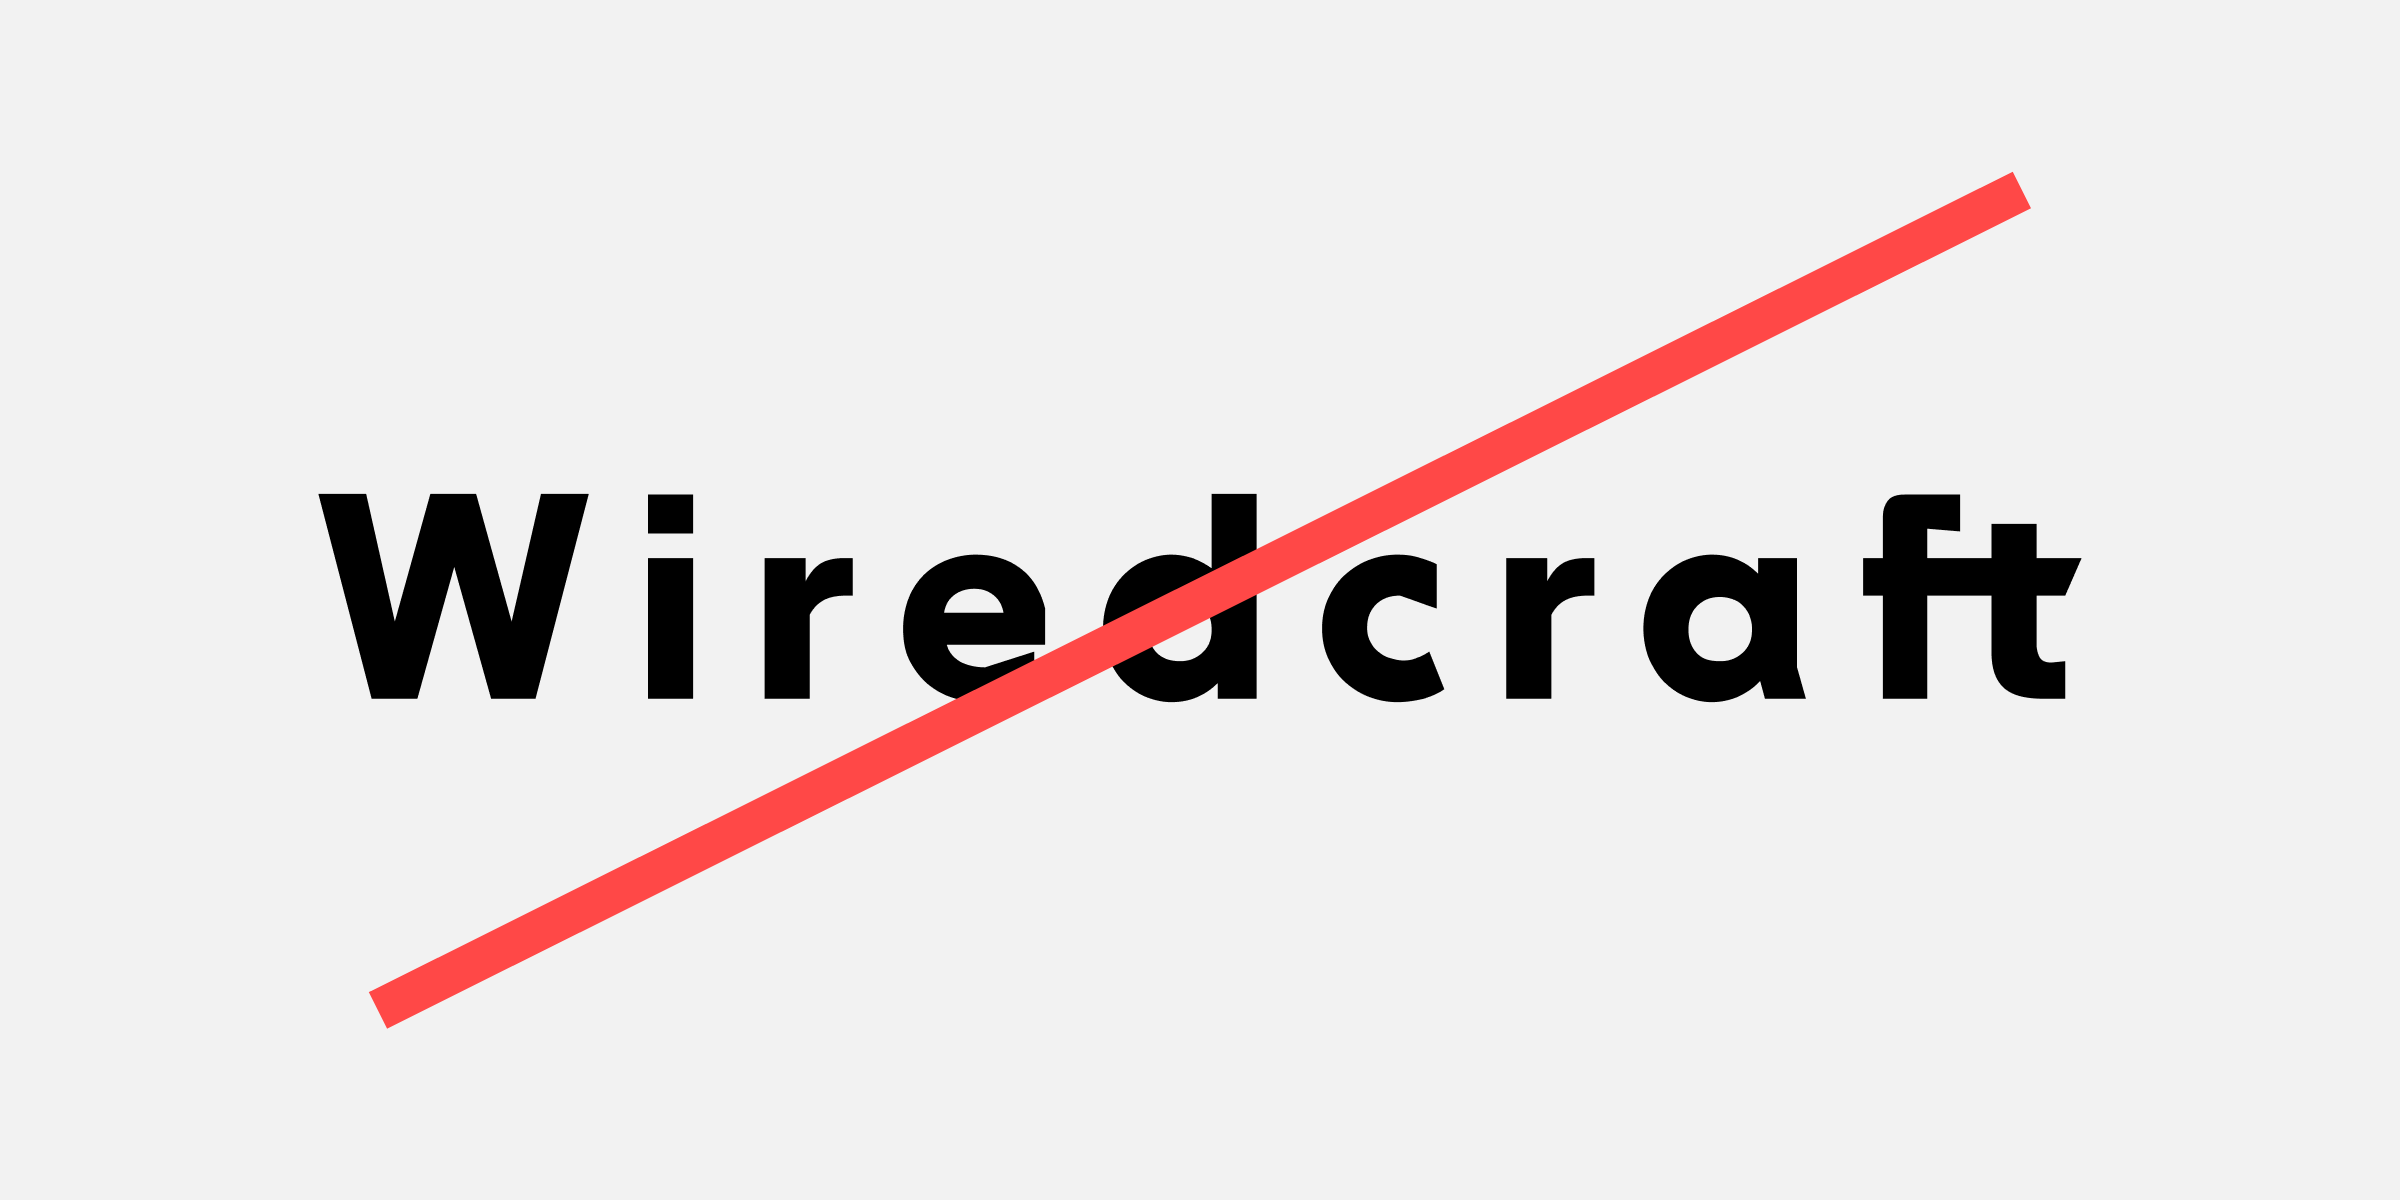 wiredcraft logo misuse